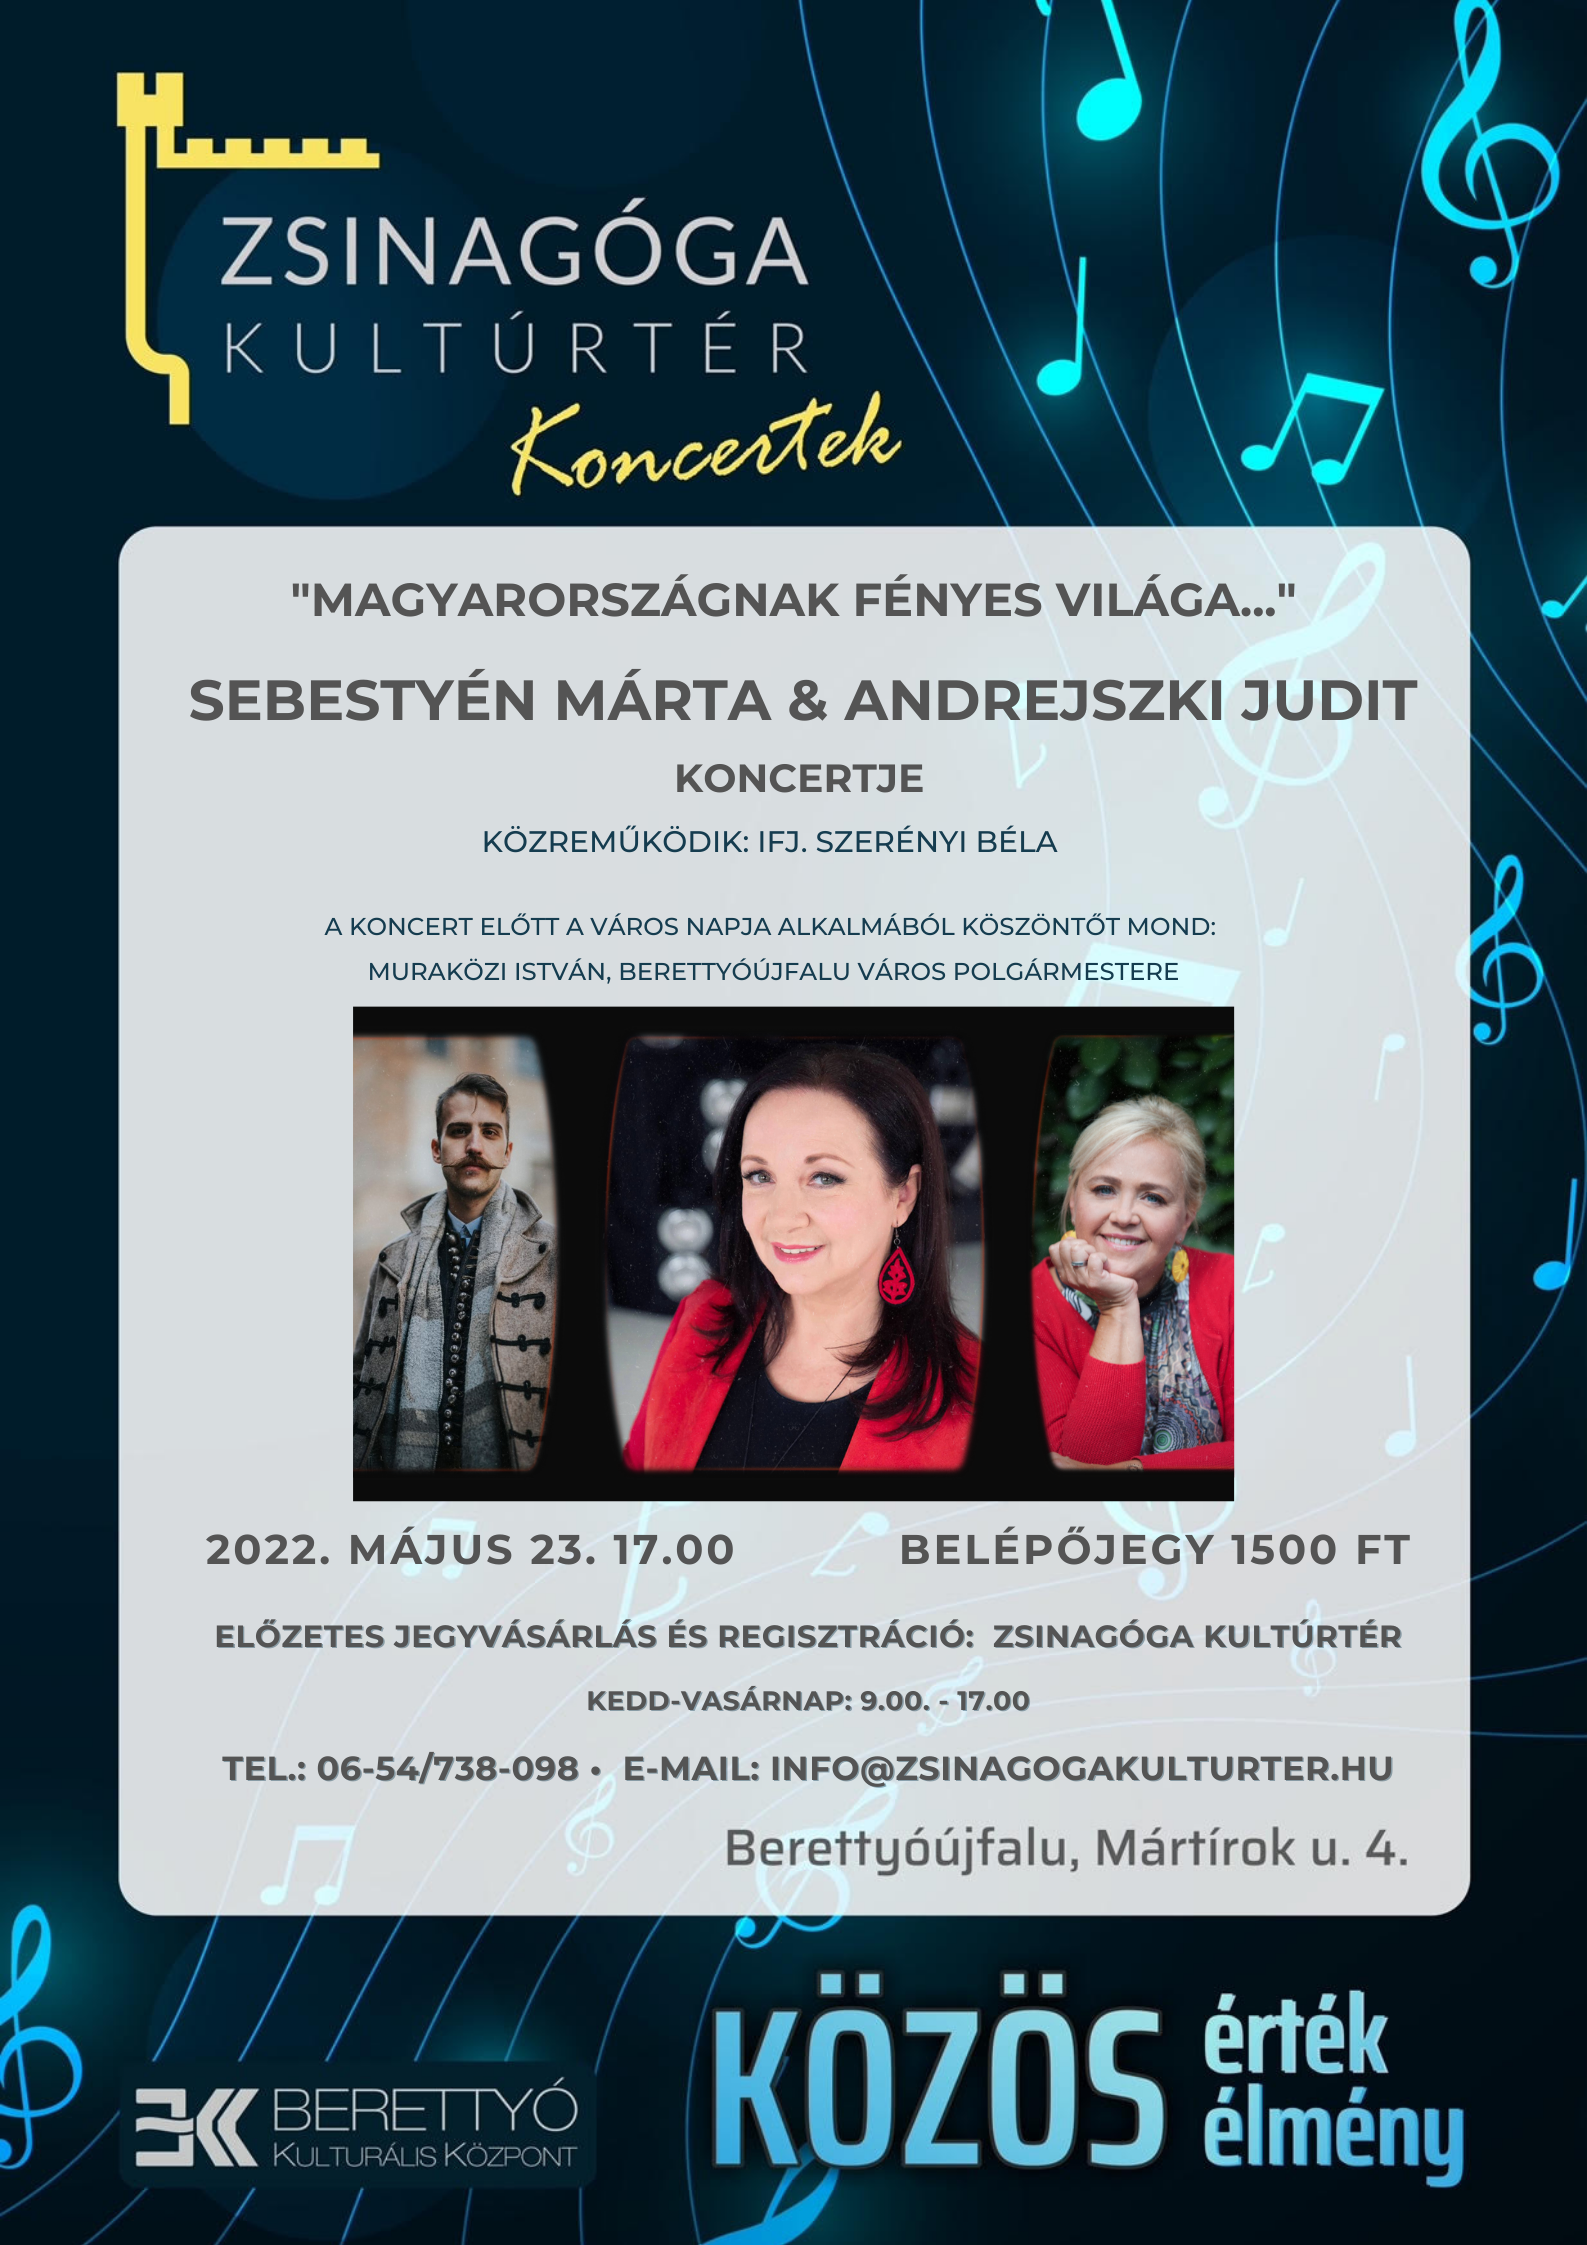 Zsinagóga Koncertek - Sebestyén Márta & Andrejszki Judit koncertje